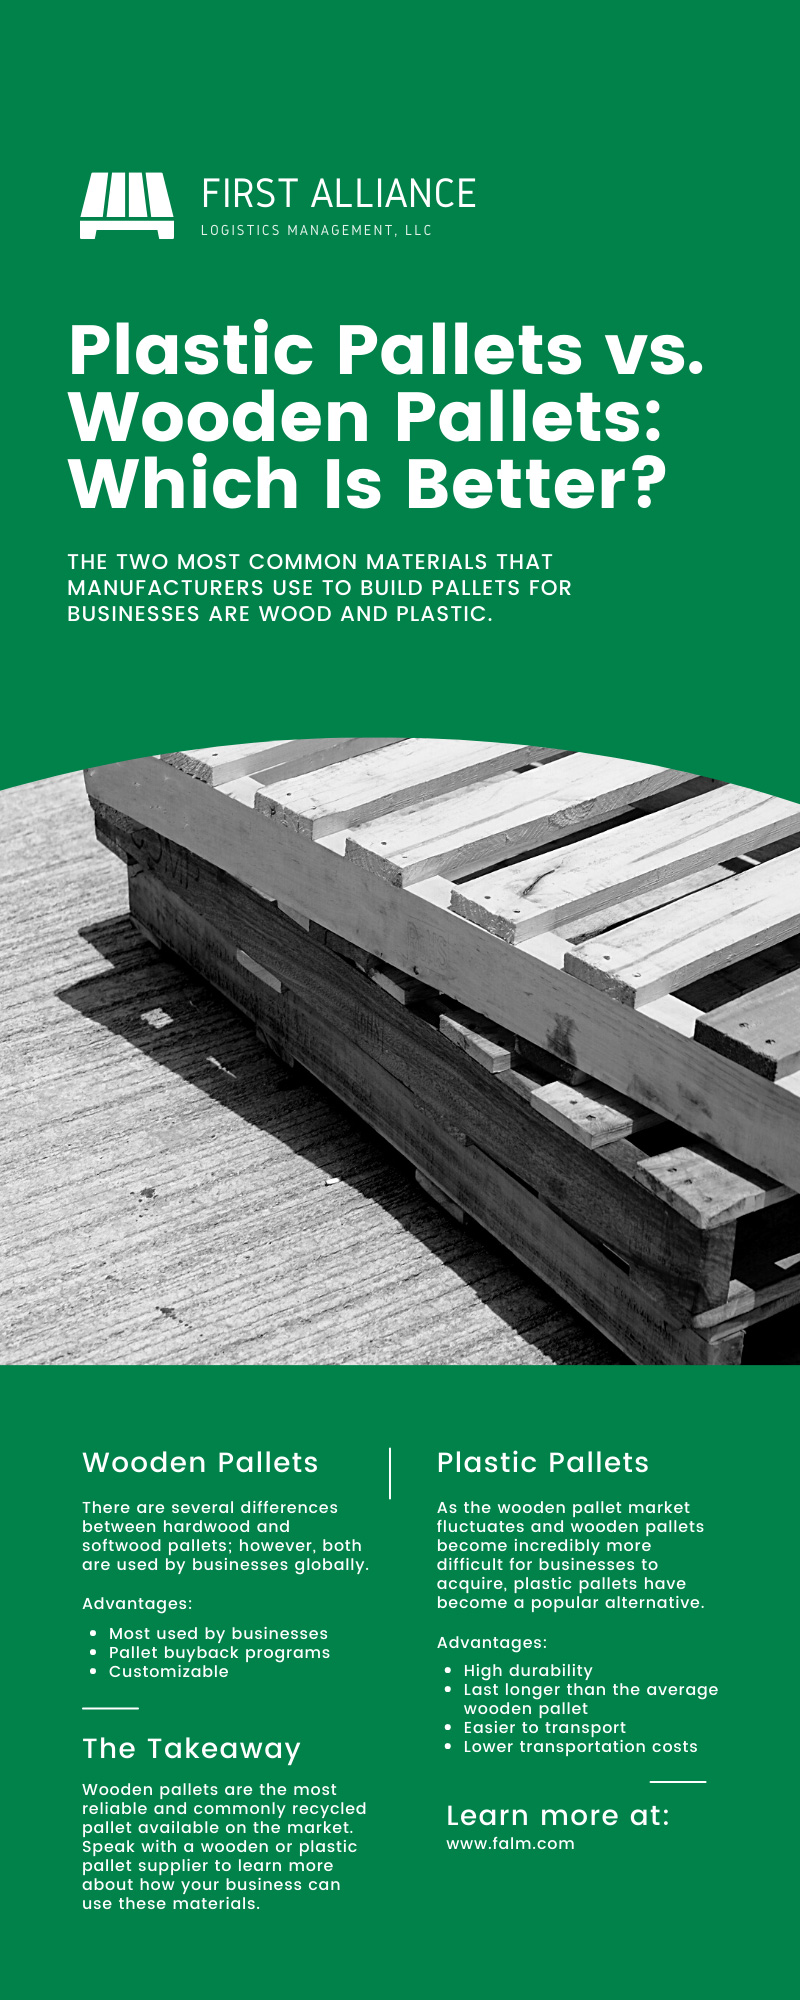 7 Advantages of Plastic Pallets over Wooden Pallets